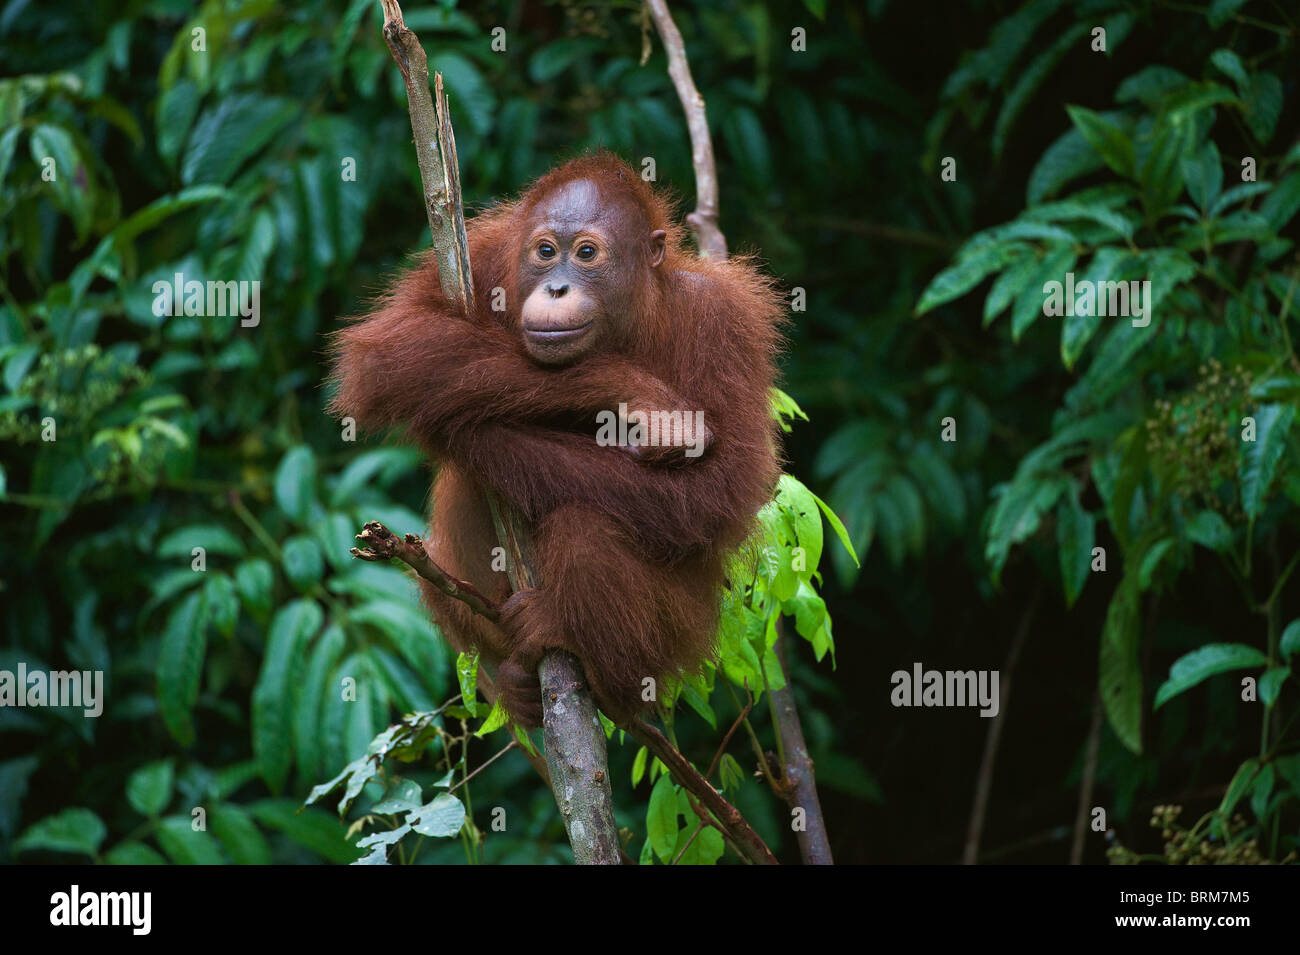 Young Orangutan sitting on the tree Stock Photo